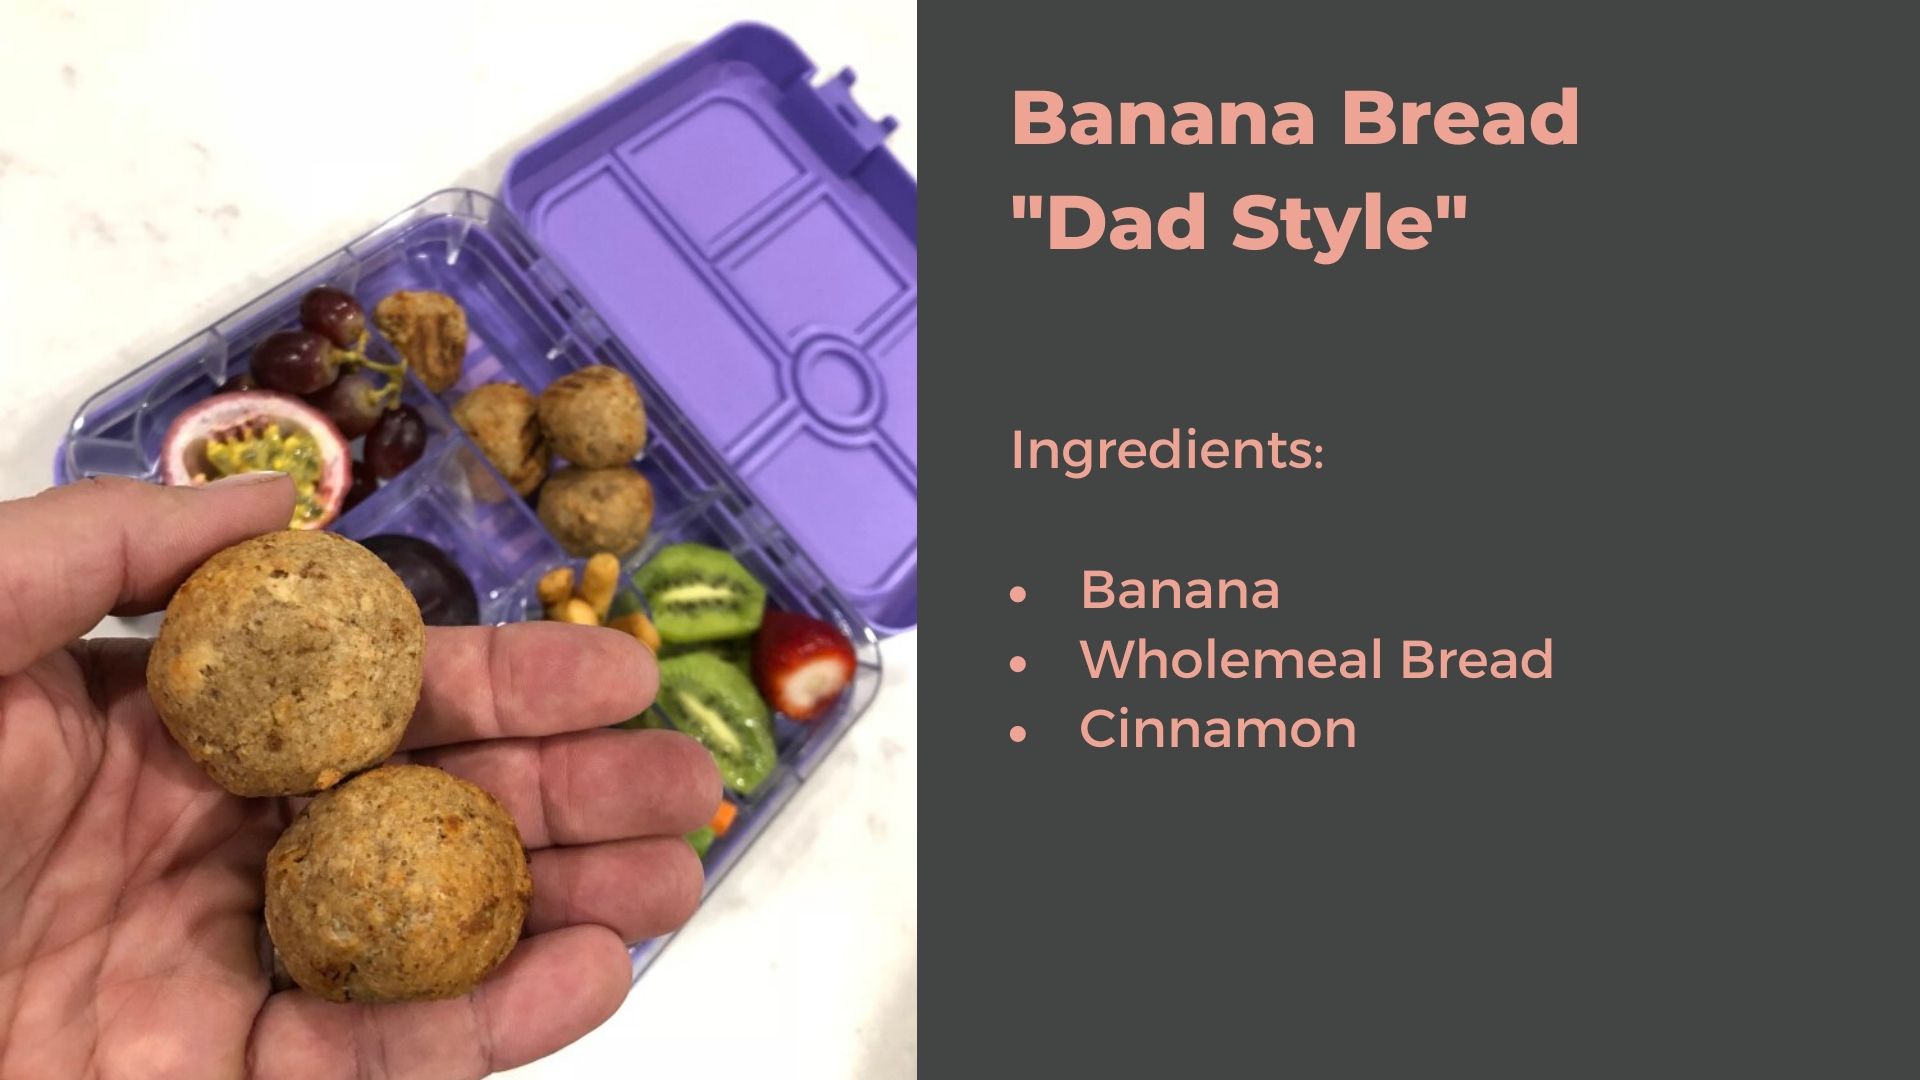 "Dad style" banana bread